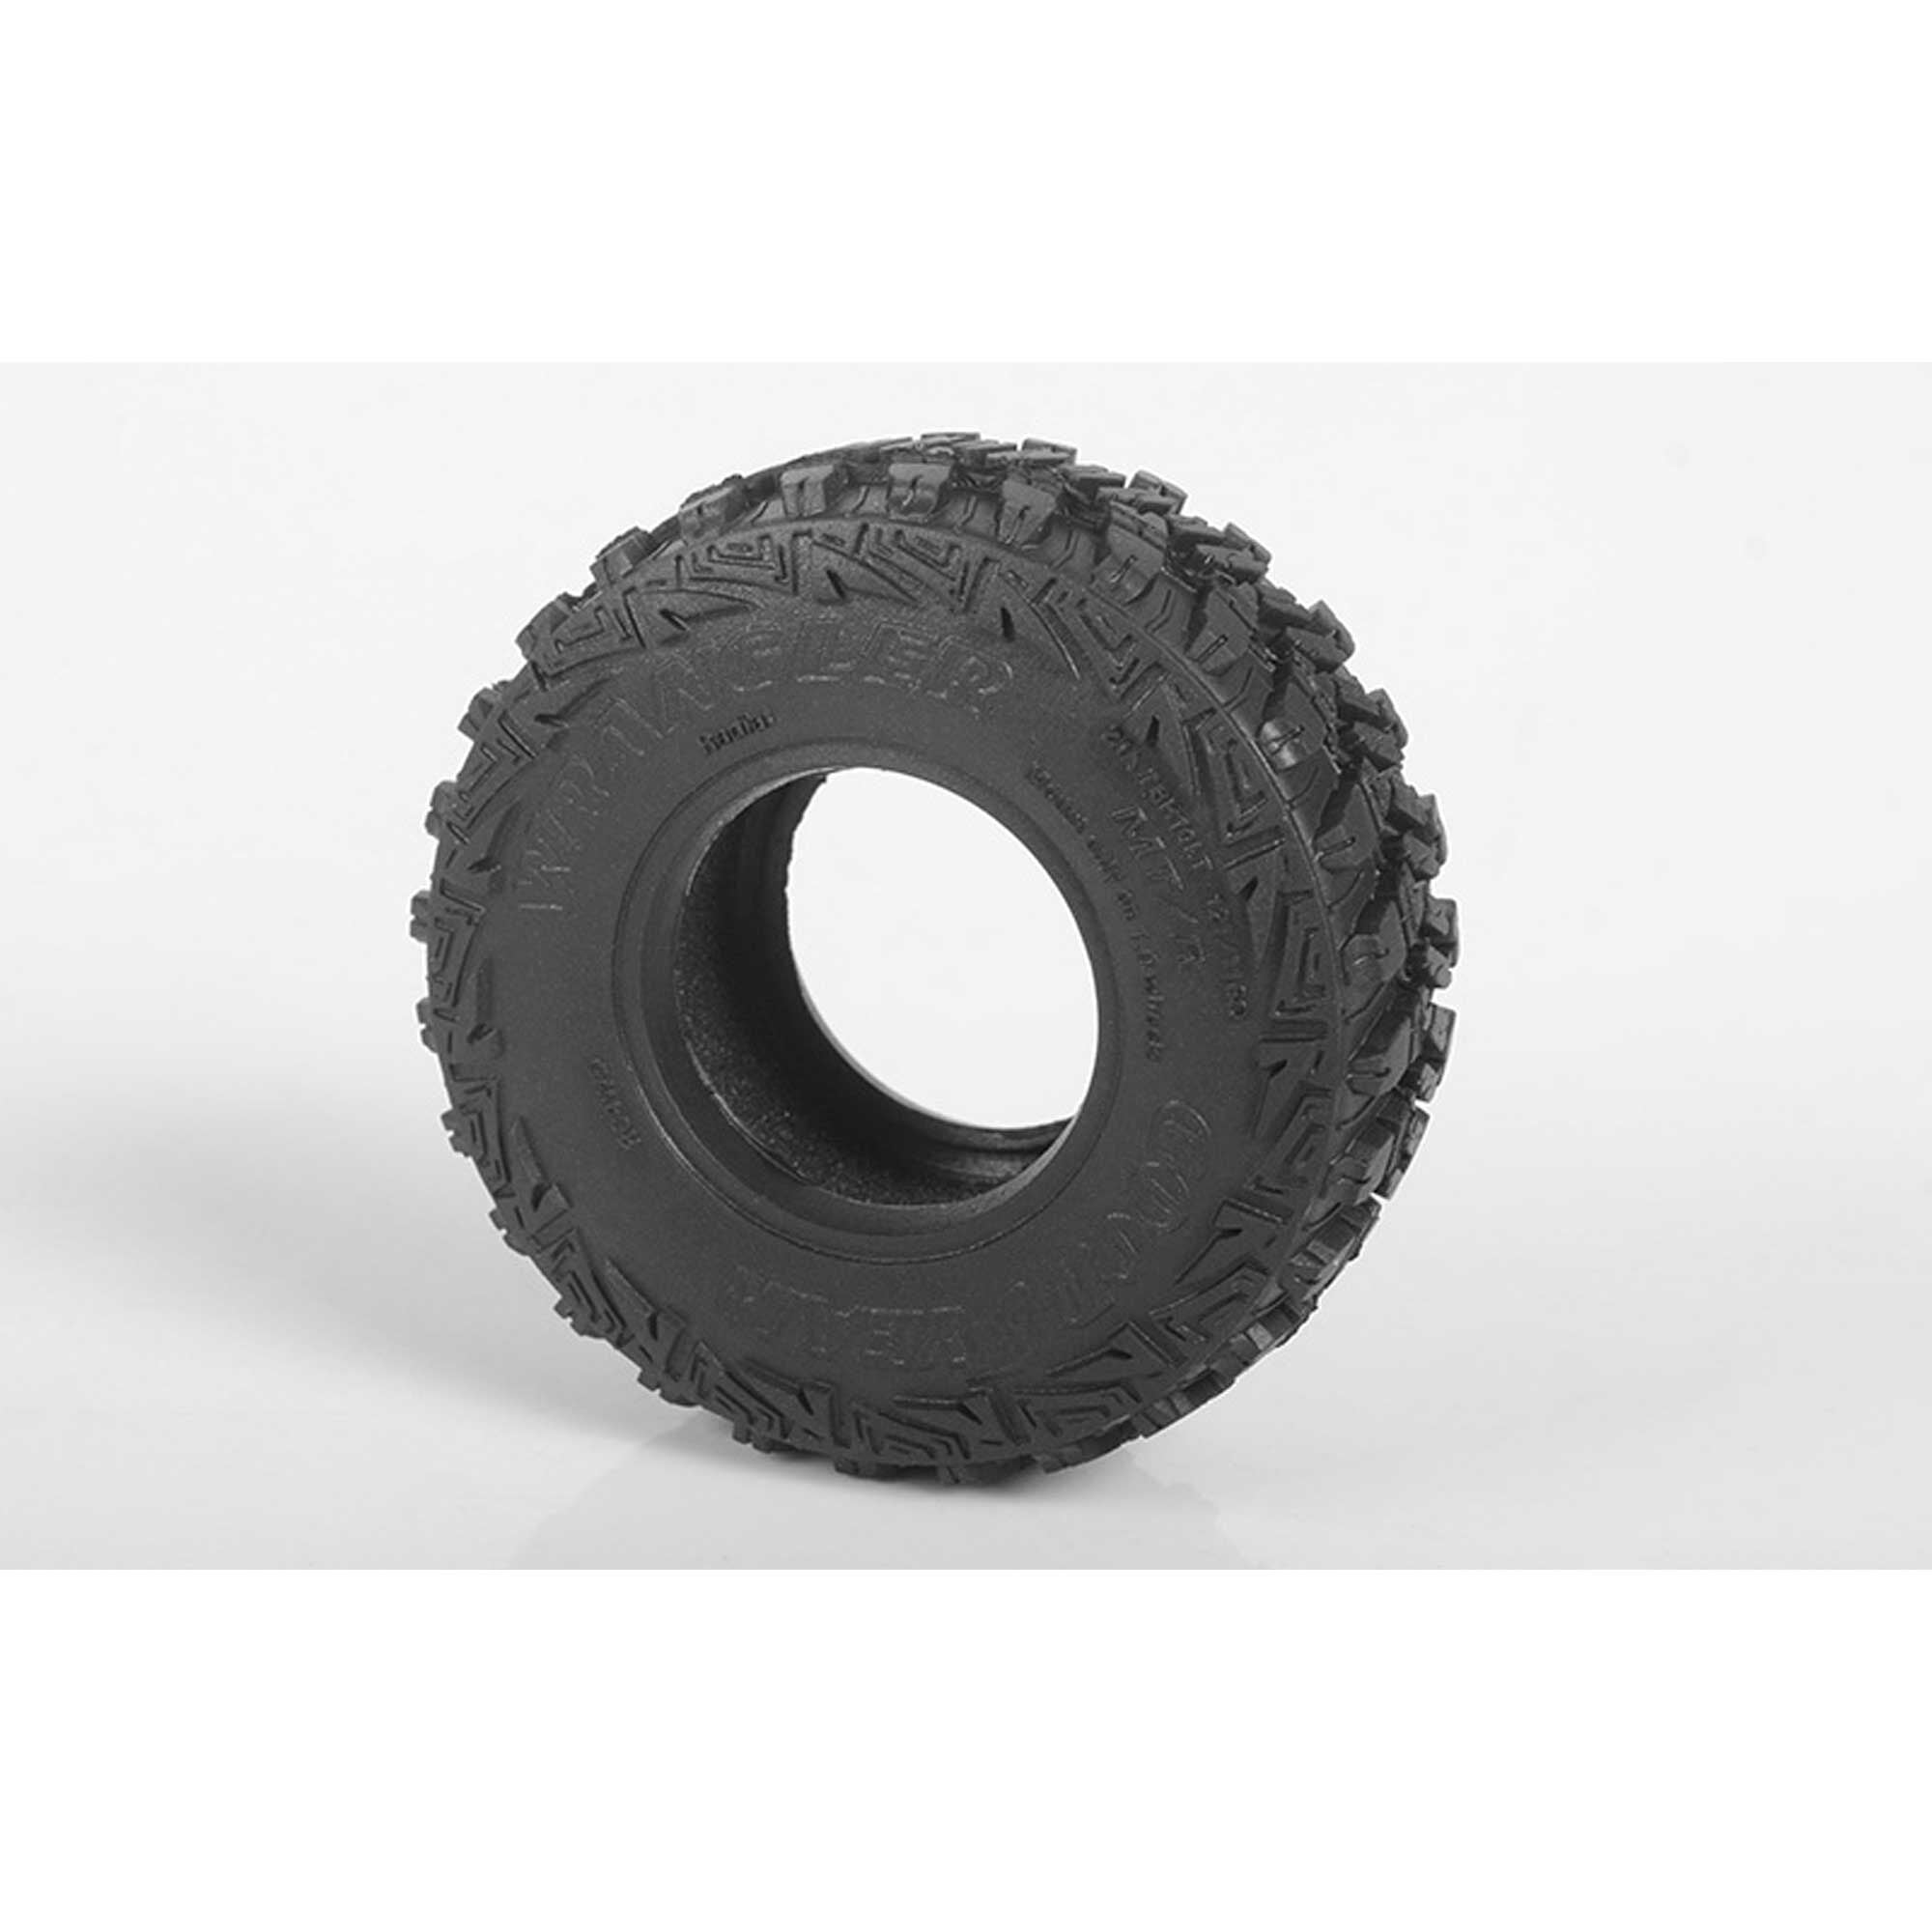 RC4ZT0161: Goodyear Wrangler MT/R 1" Micro Scale Tire (2)